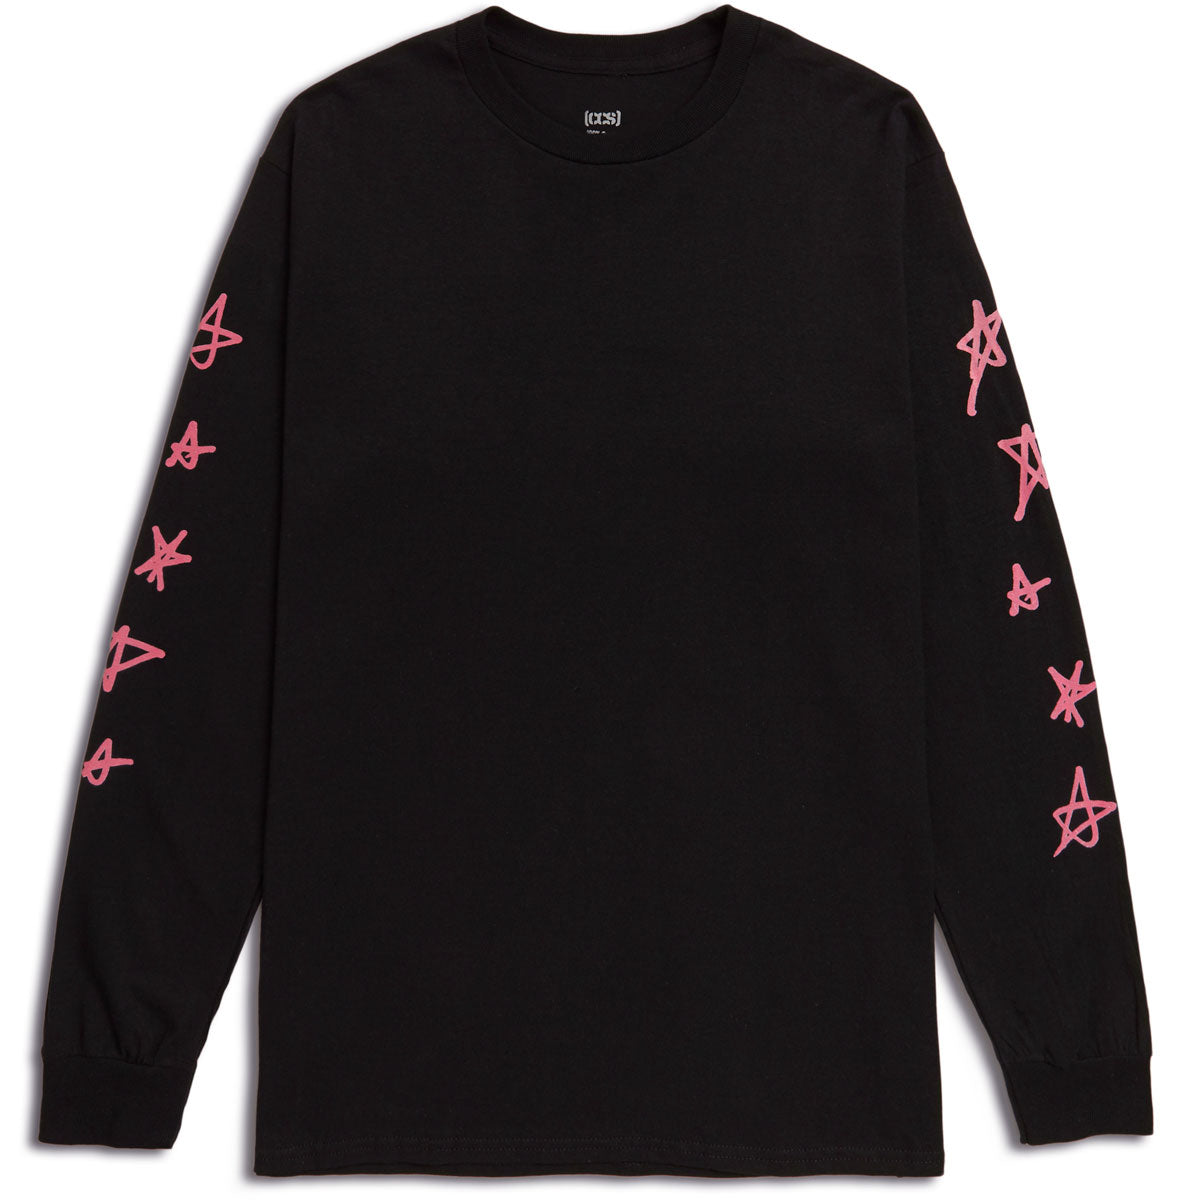 CCS Stars Long Sleeve T-Shirt - Black/Pink - LG image 1